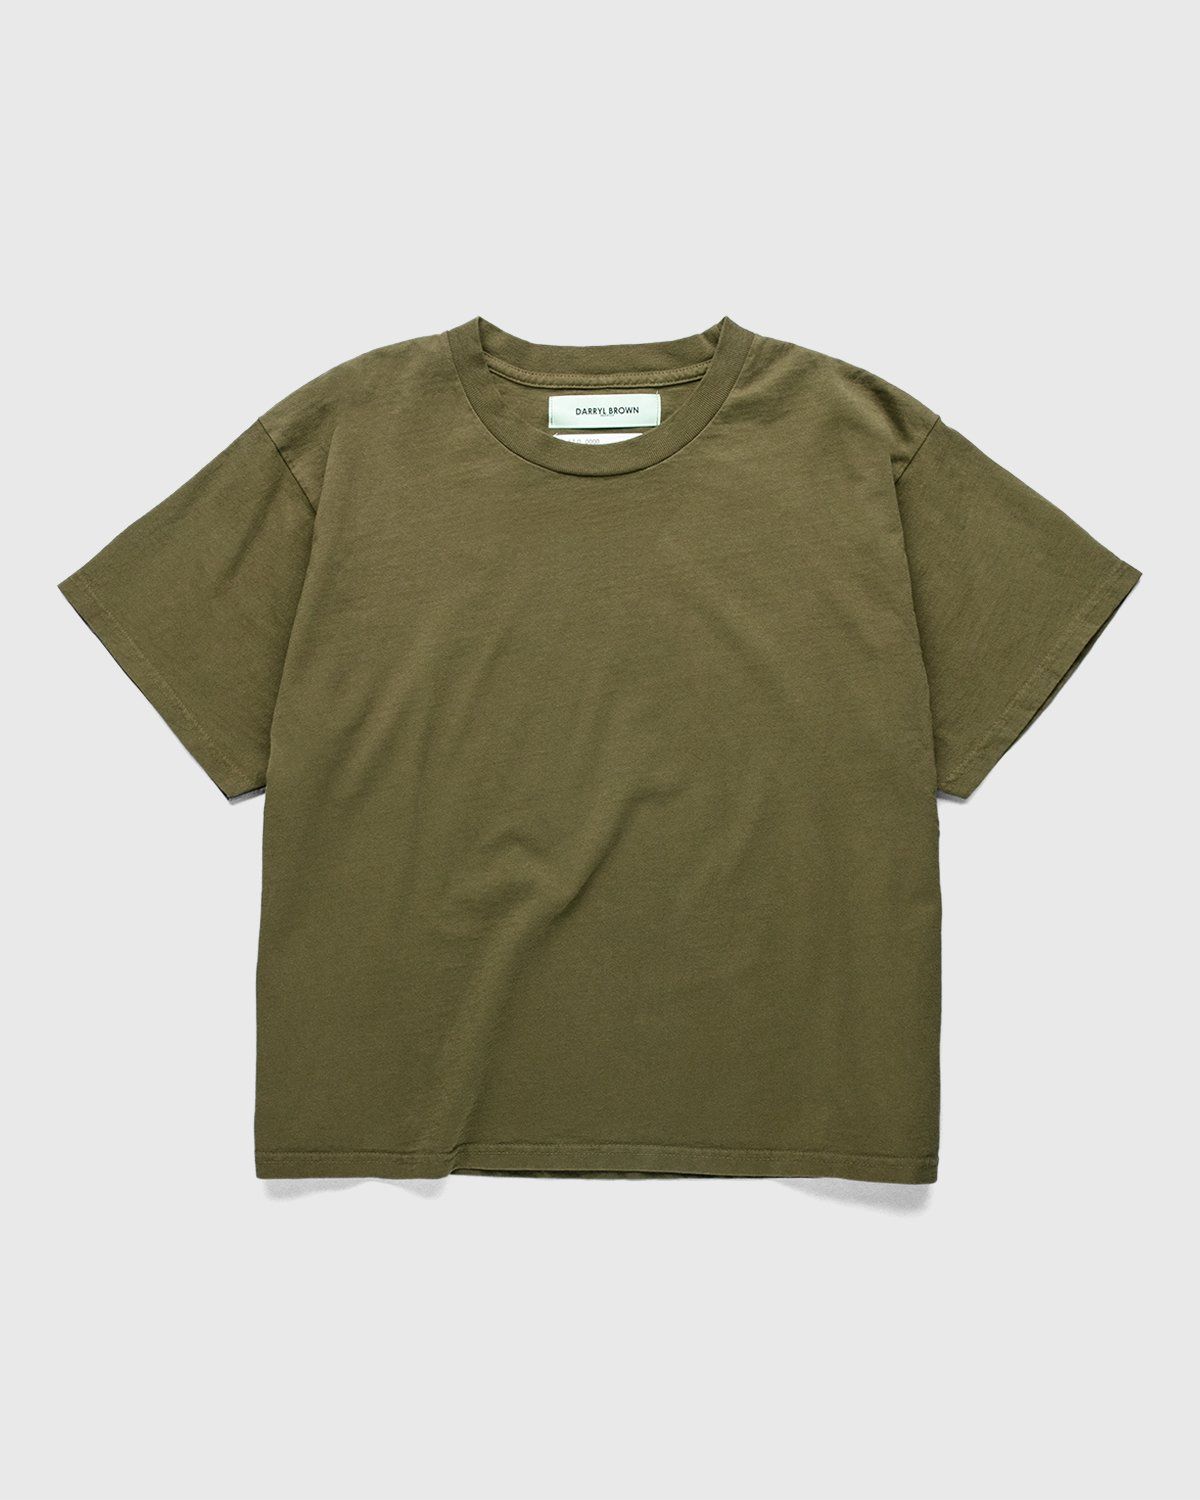 Darryl Brown – T-Shirt Military Olive - T-Shirts - Green - Image 1